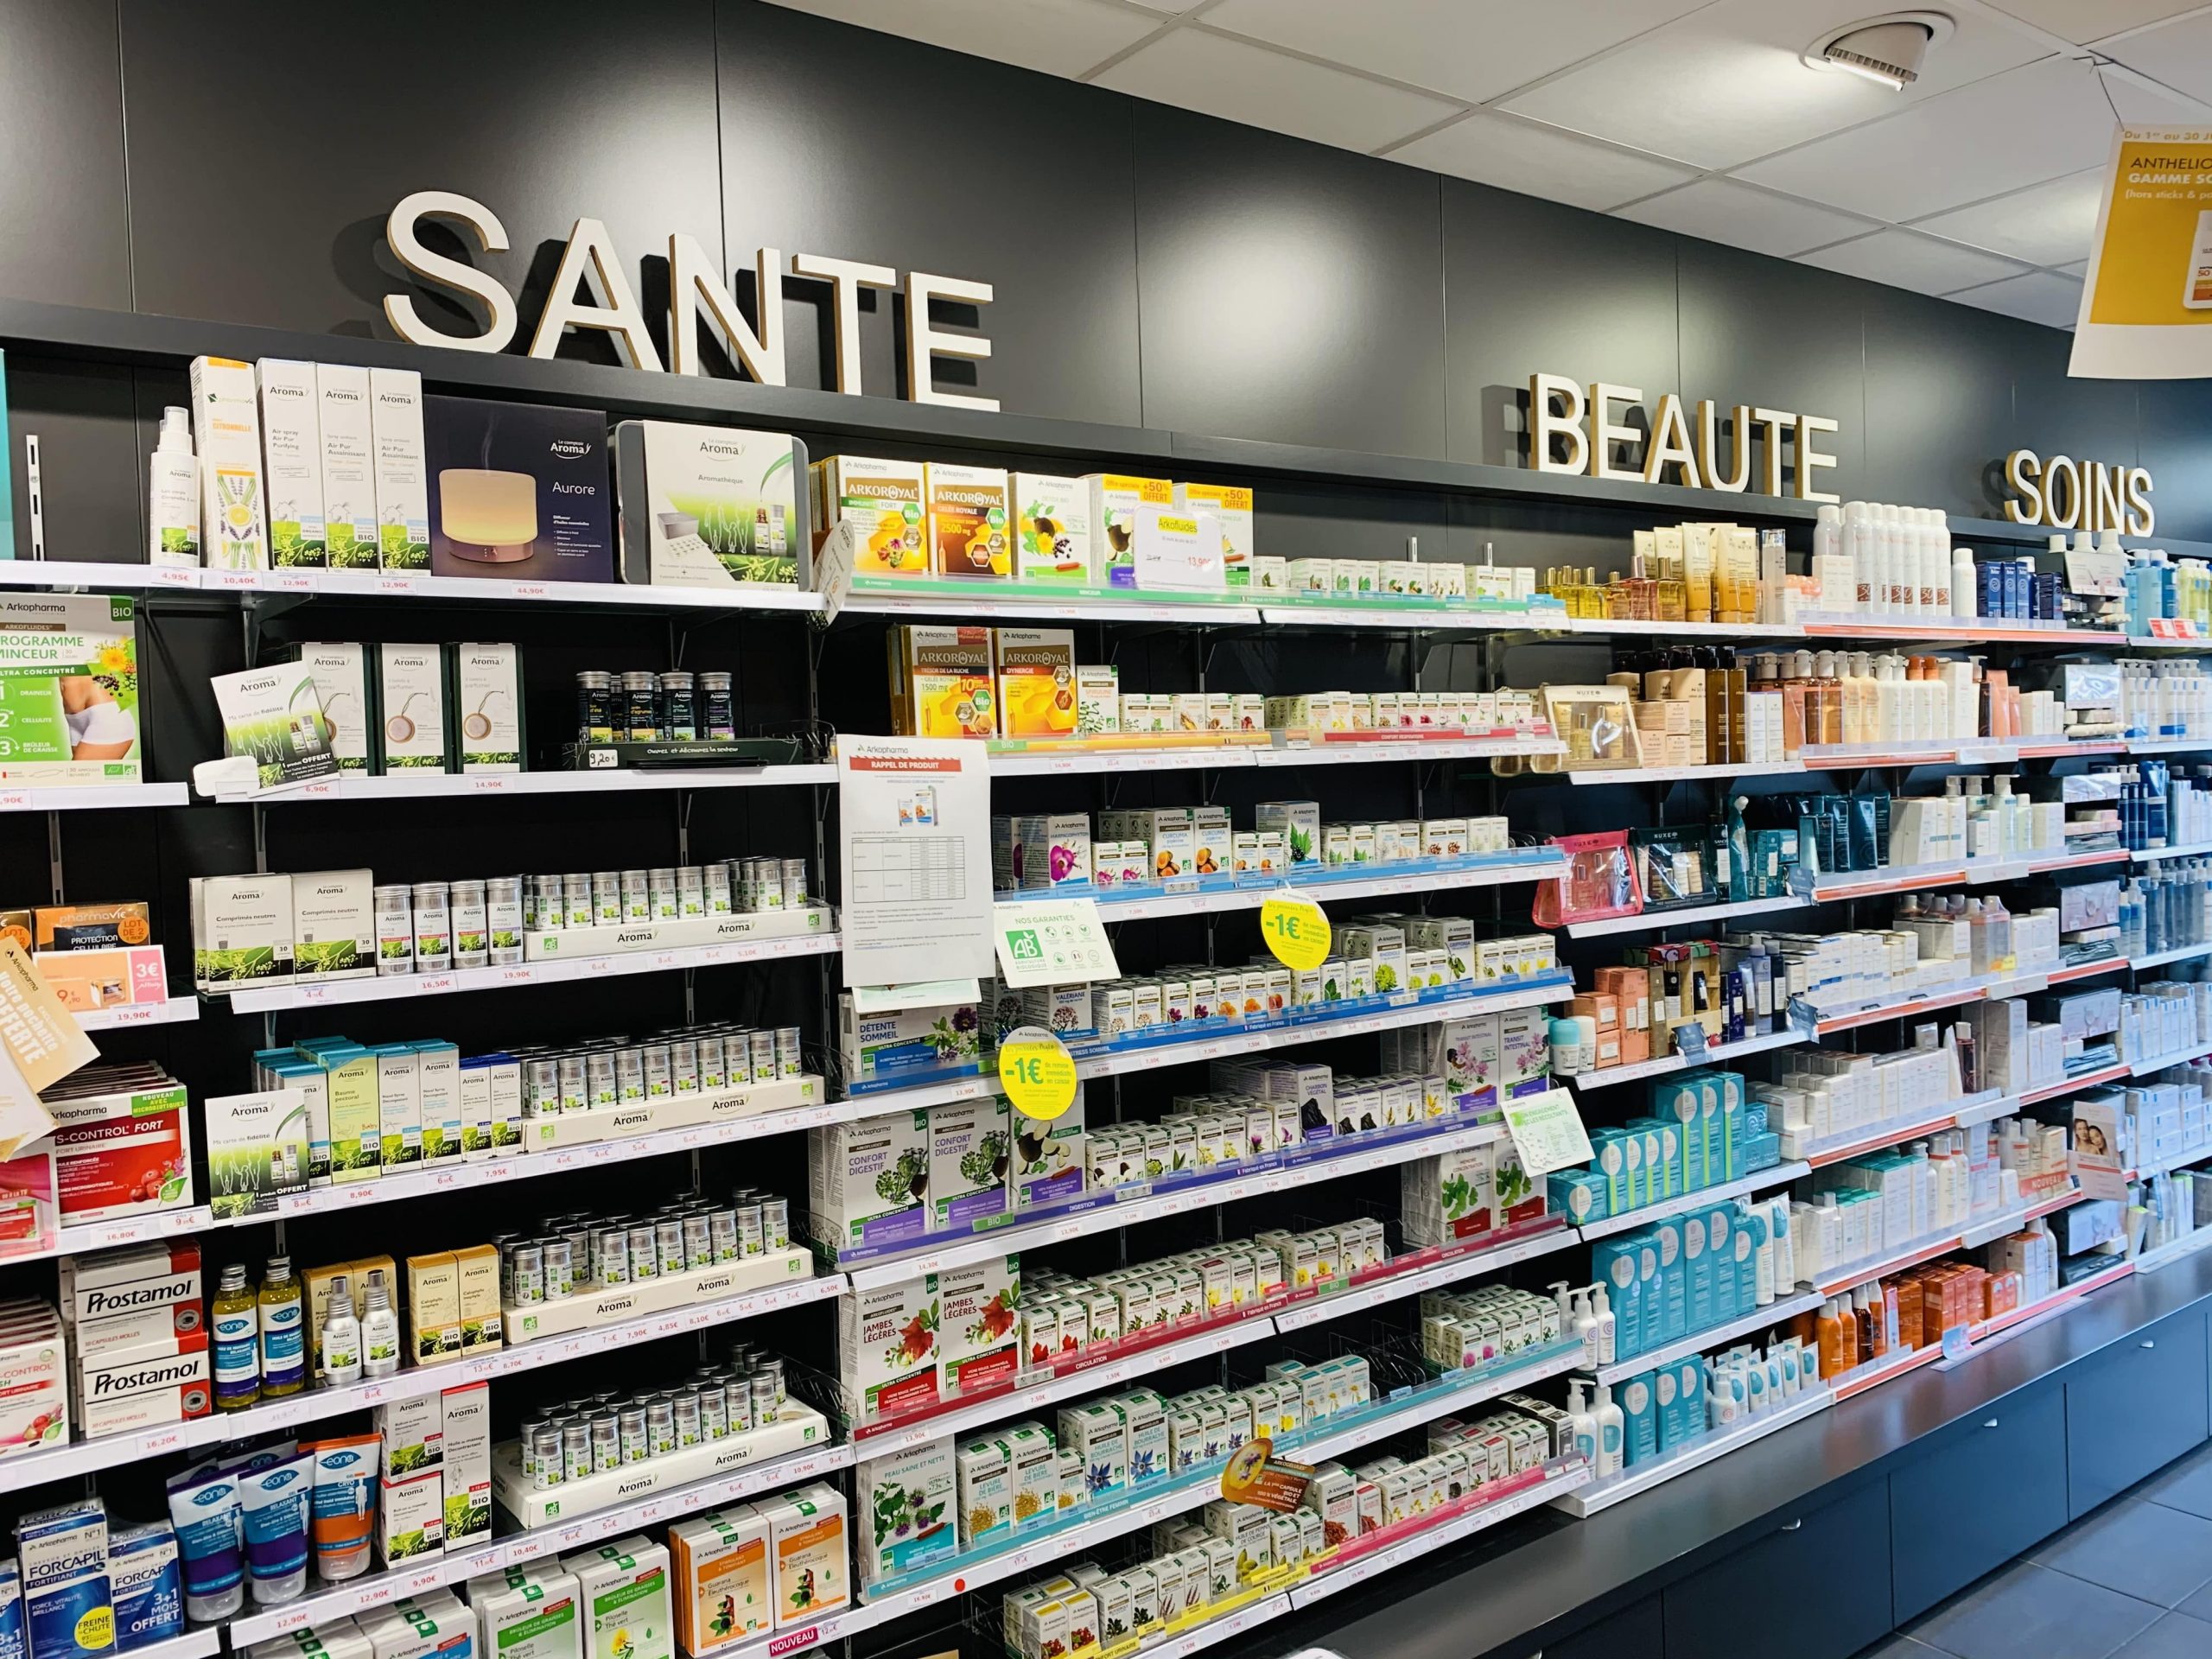 Pharmacie Sainte-Anne - Parapharmacie Rhinolaveur Lauly - VANNES